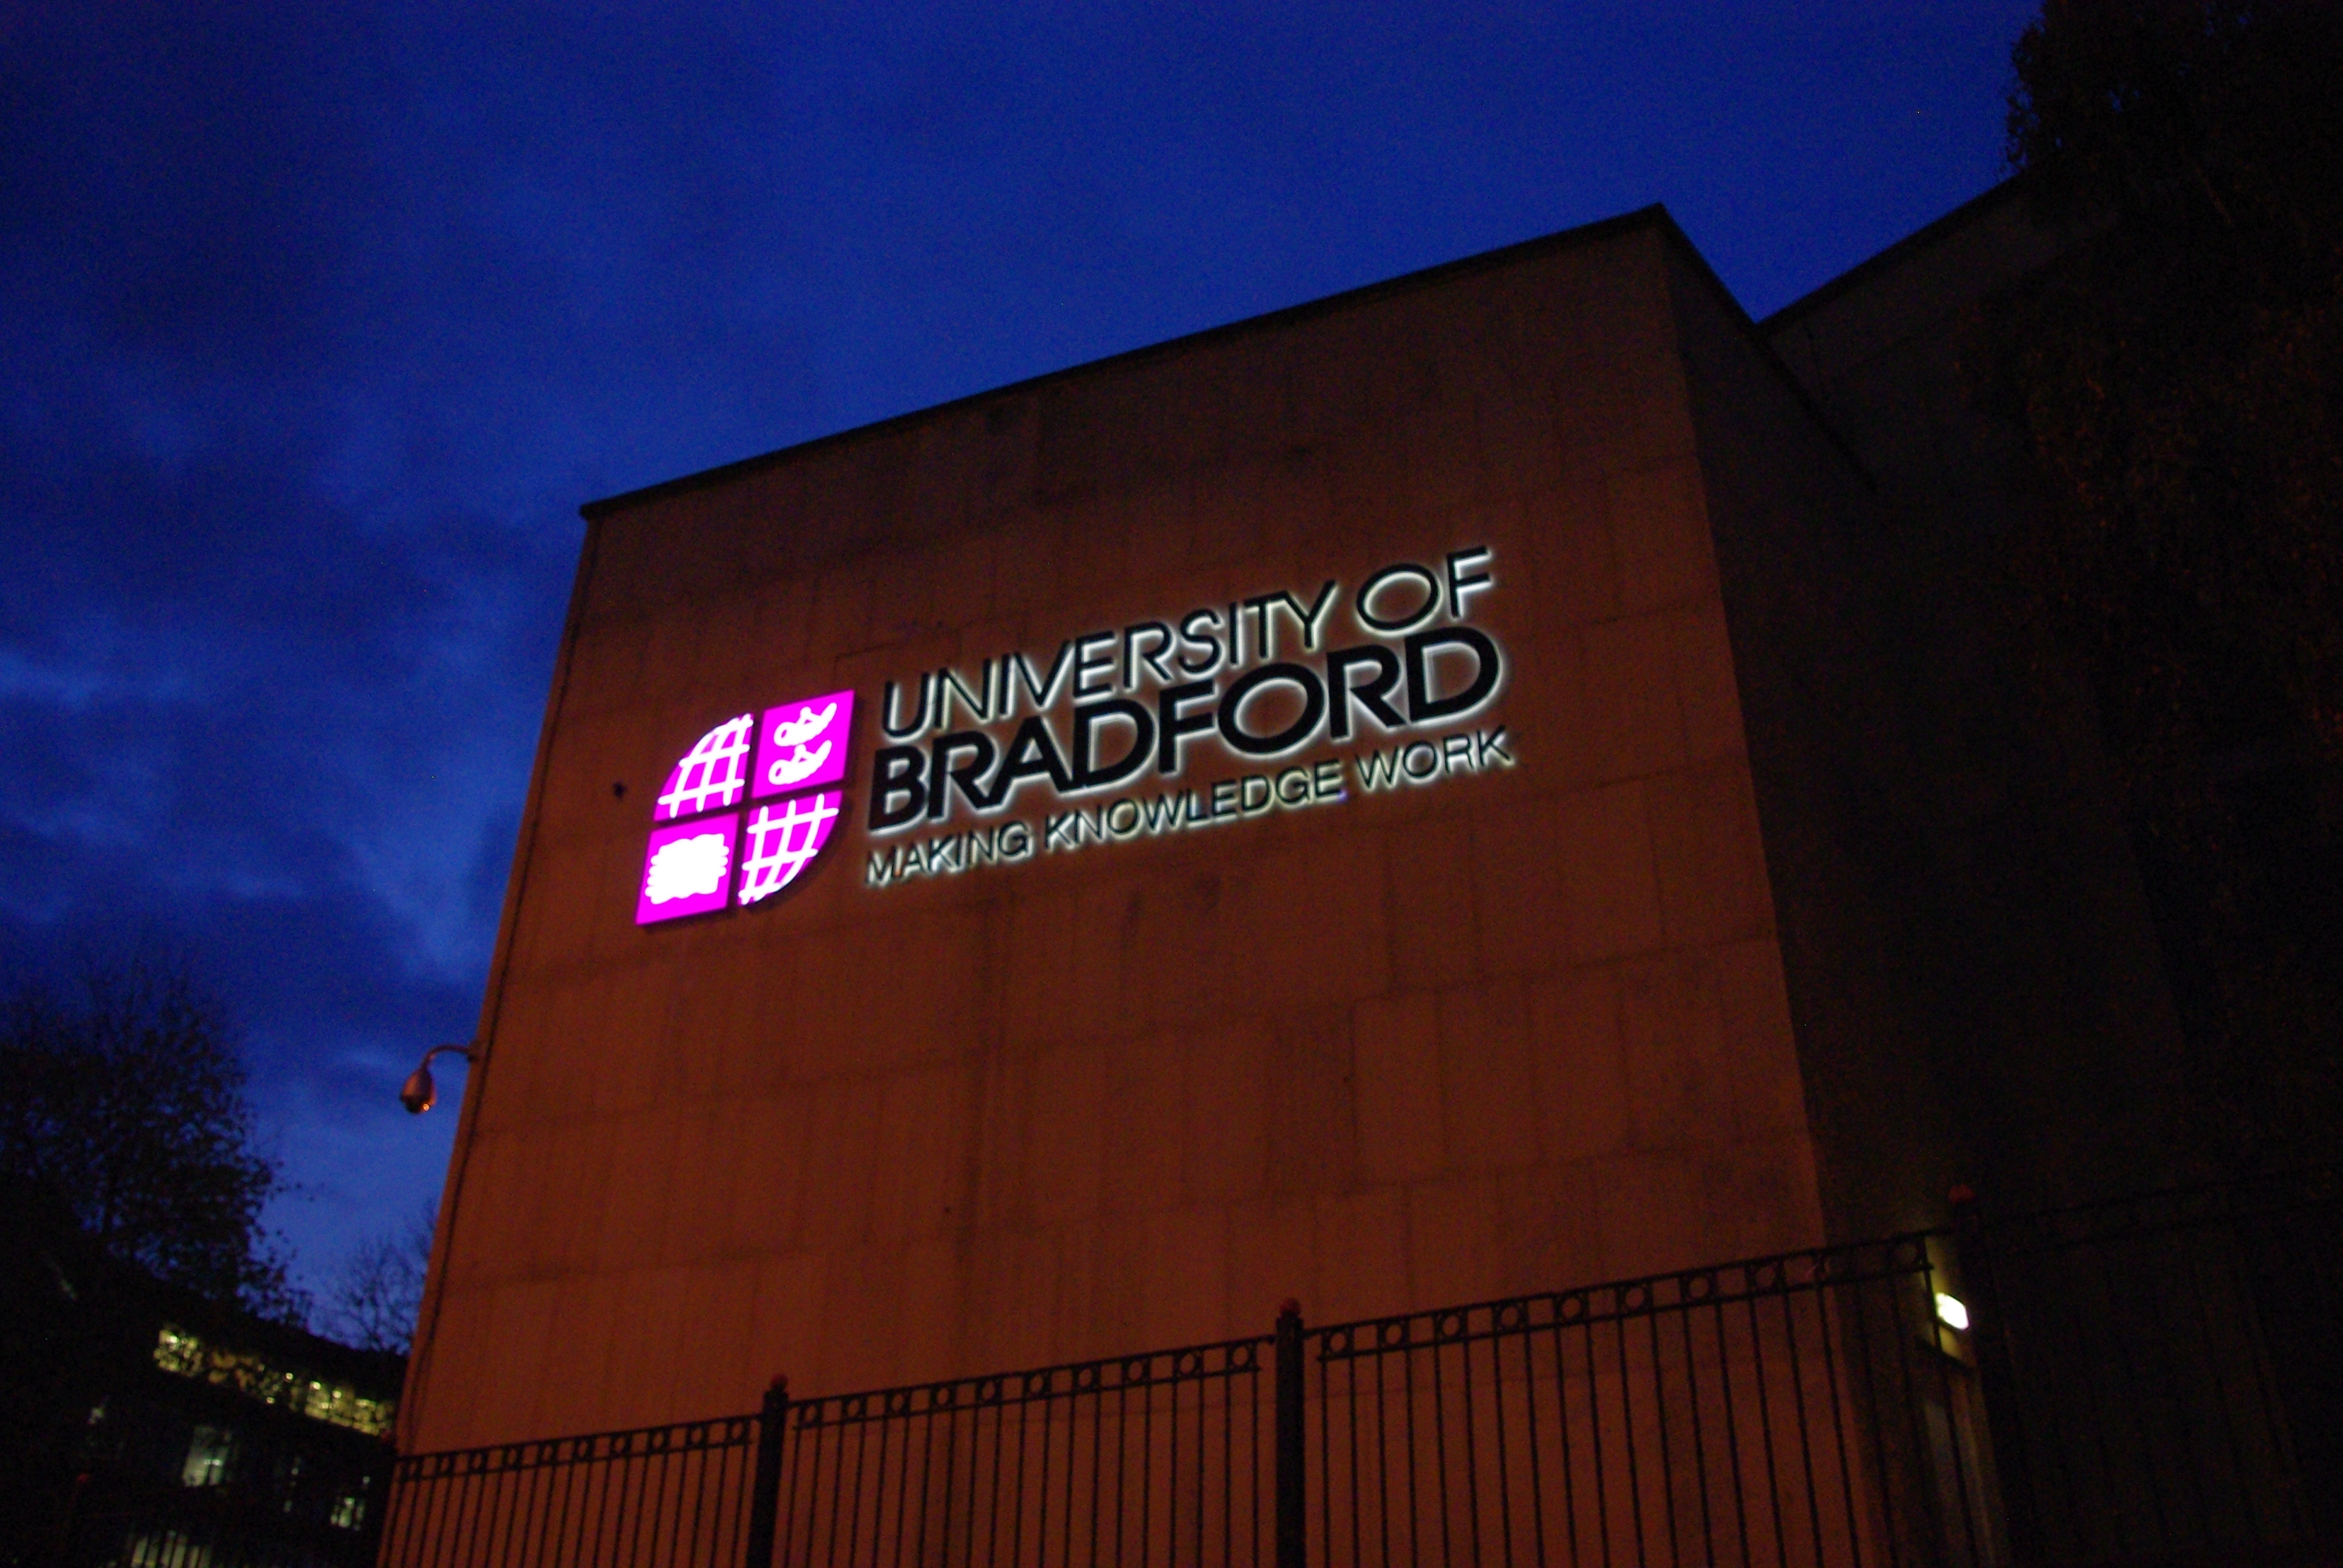 University of Bradford, AHRC Heritage Consortium Master’s Studentship in UK, 2019